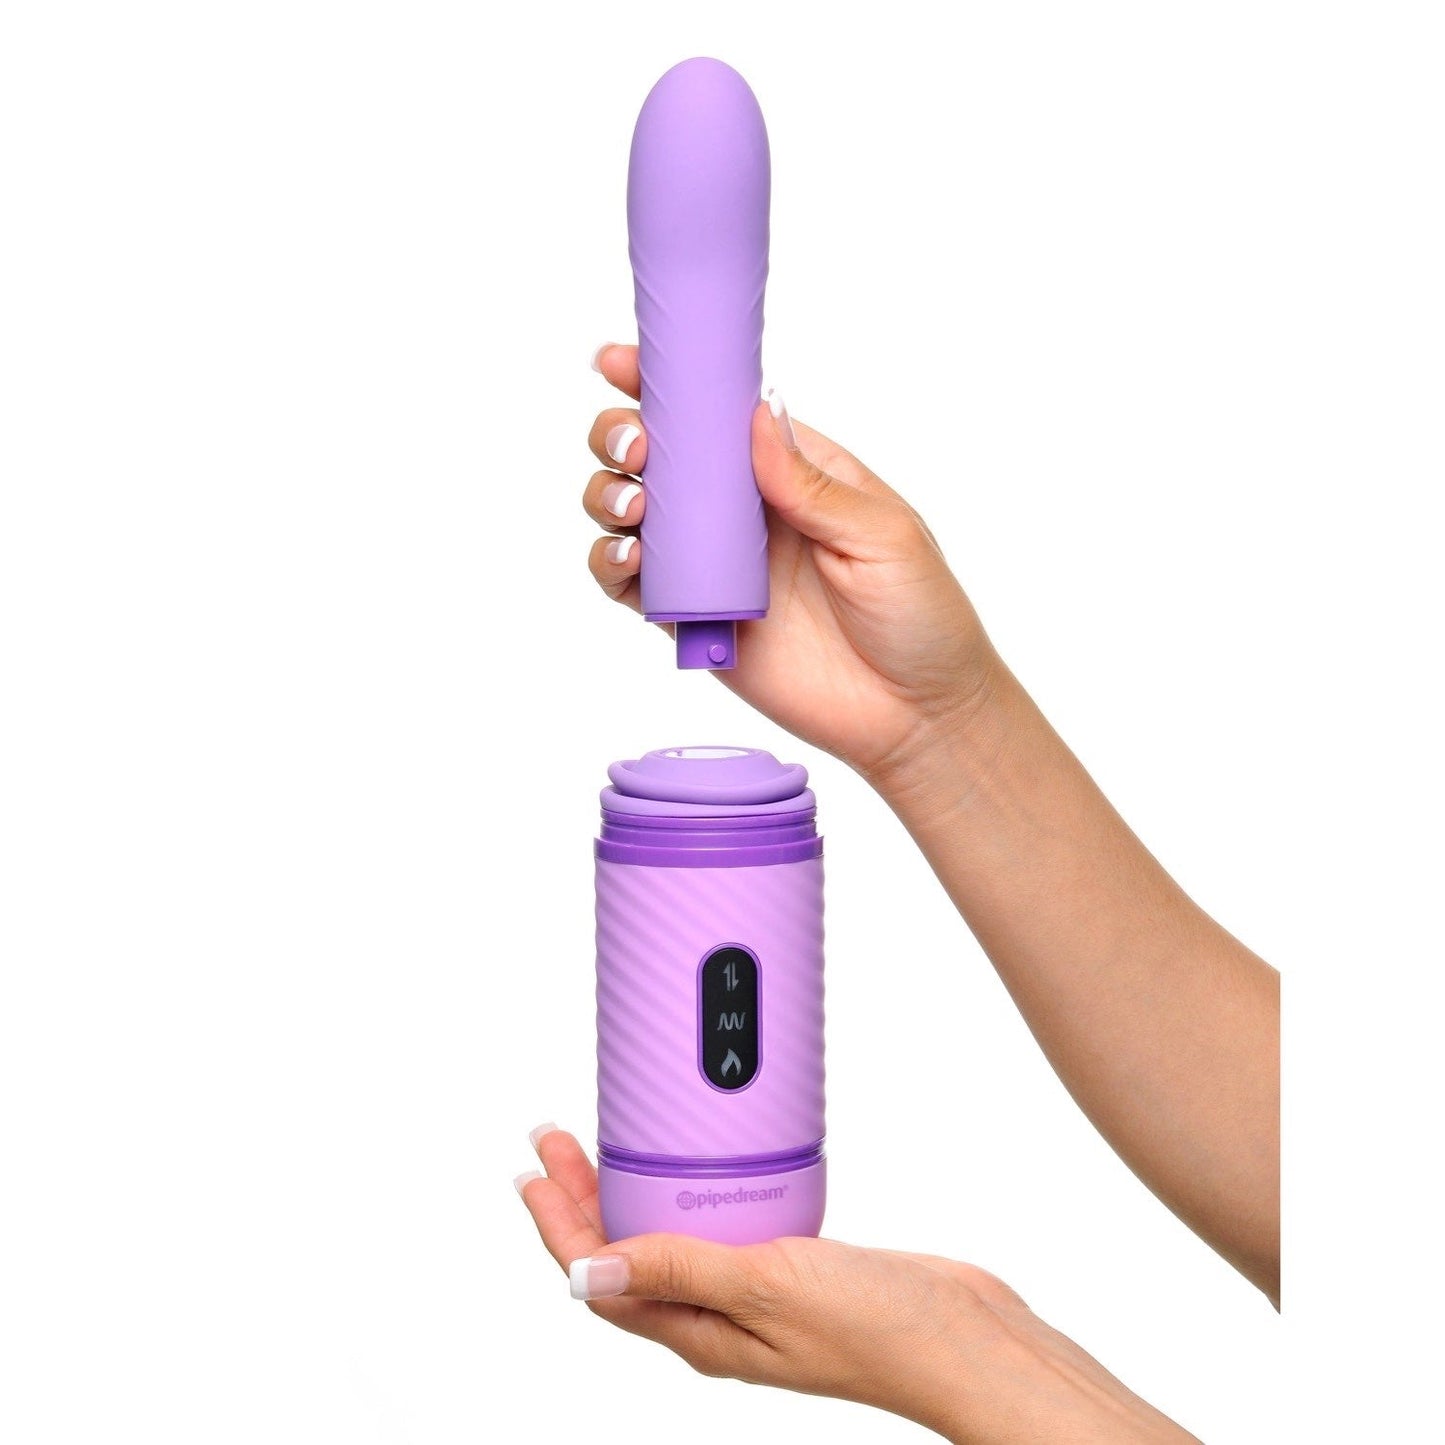 Love Thrust-Her - Purple 30.5 cm (12") USB Rechargeable Thrusting Vibrator